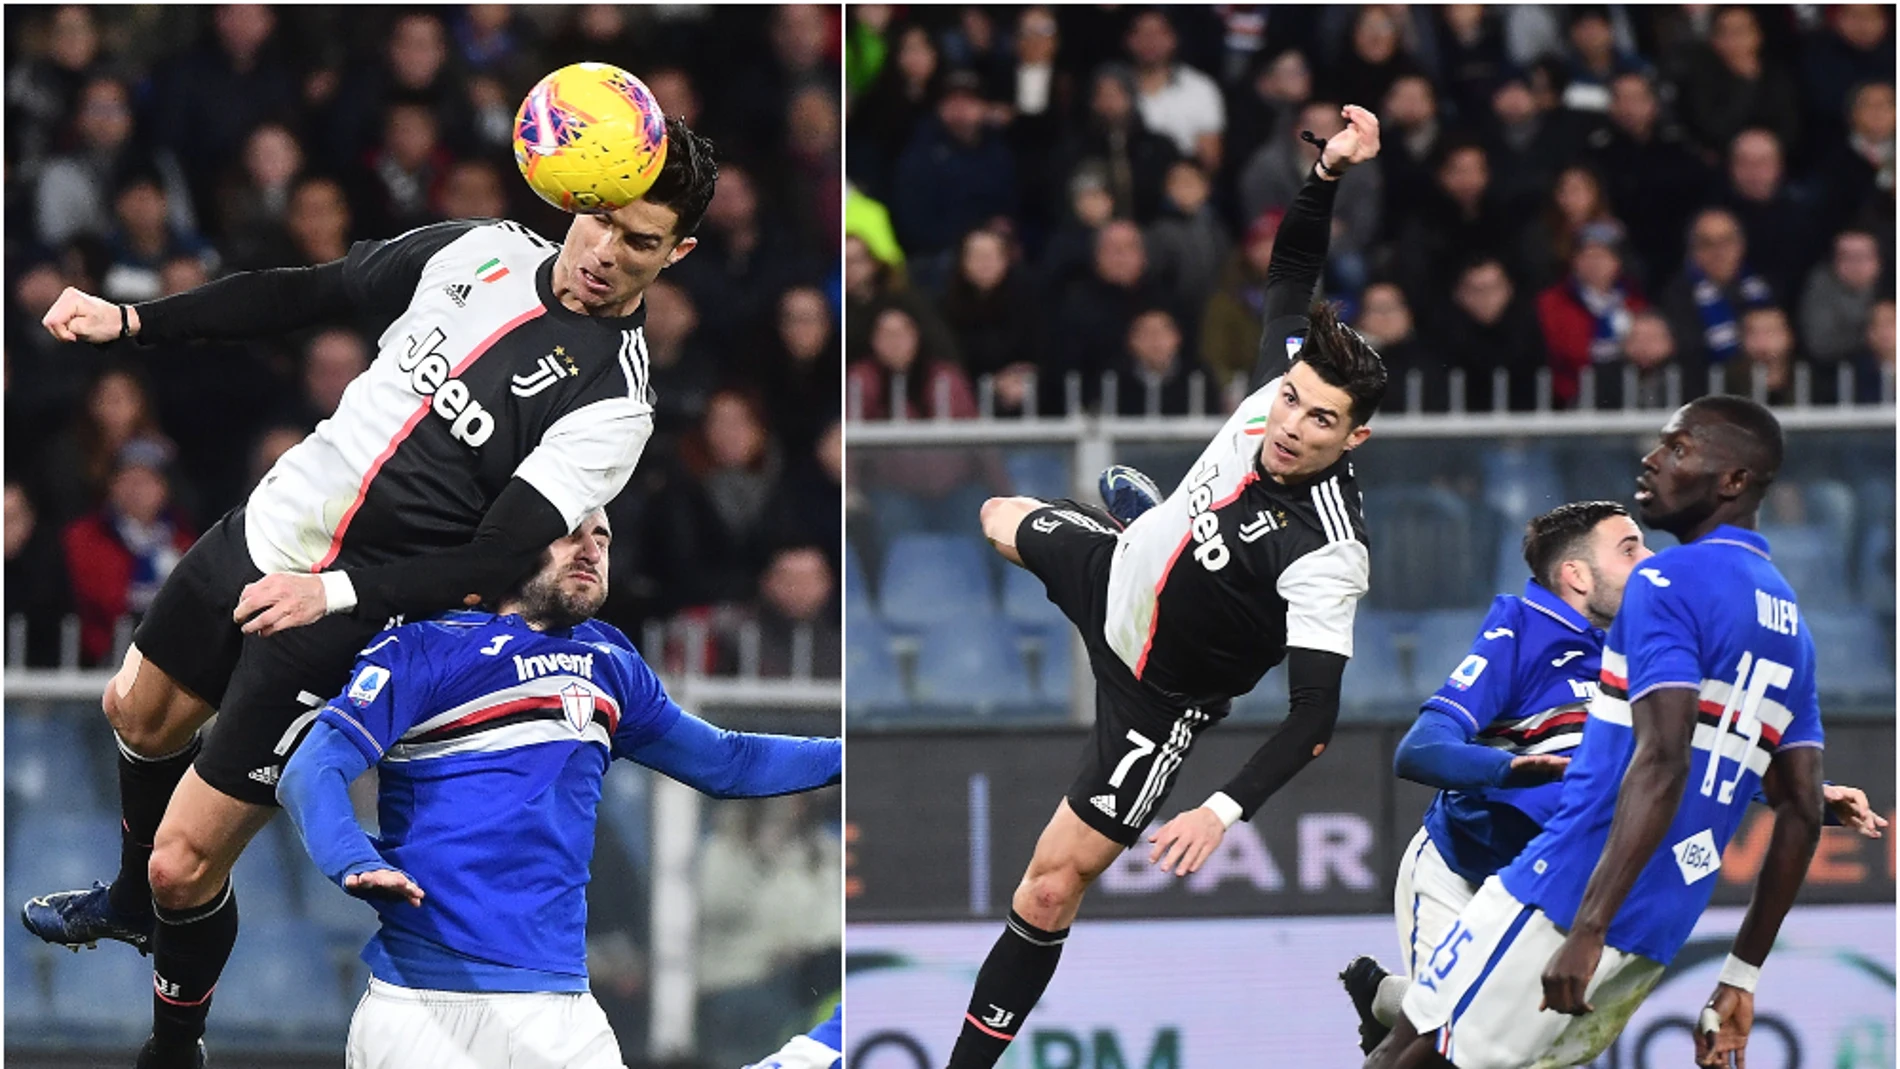 El portentoso salto de Cristiano Ronaldo contra la Sampdoria